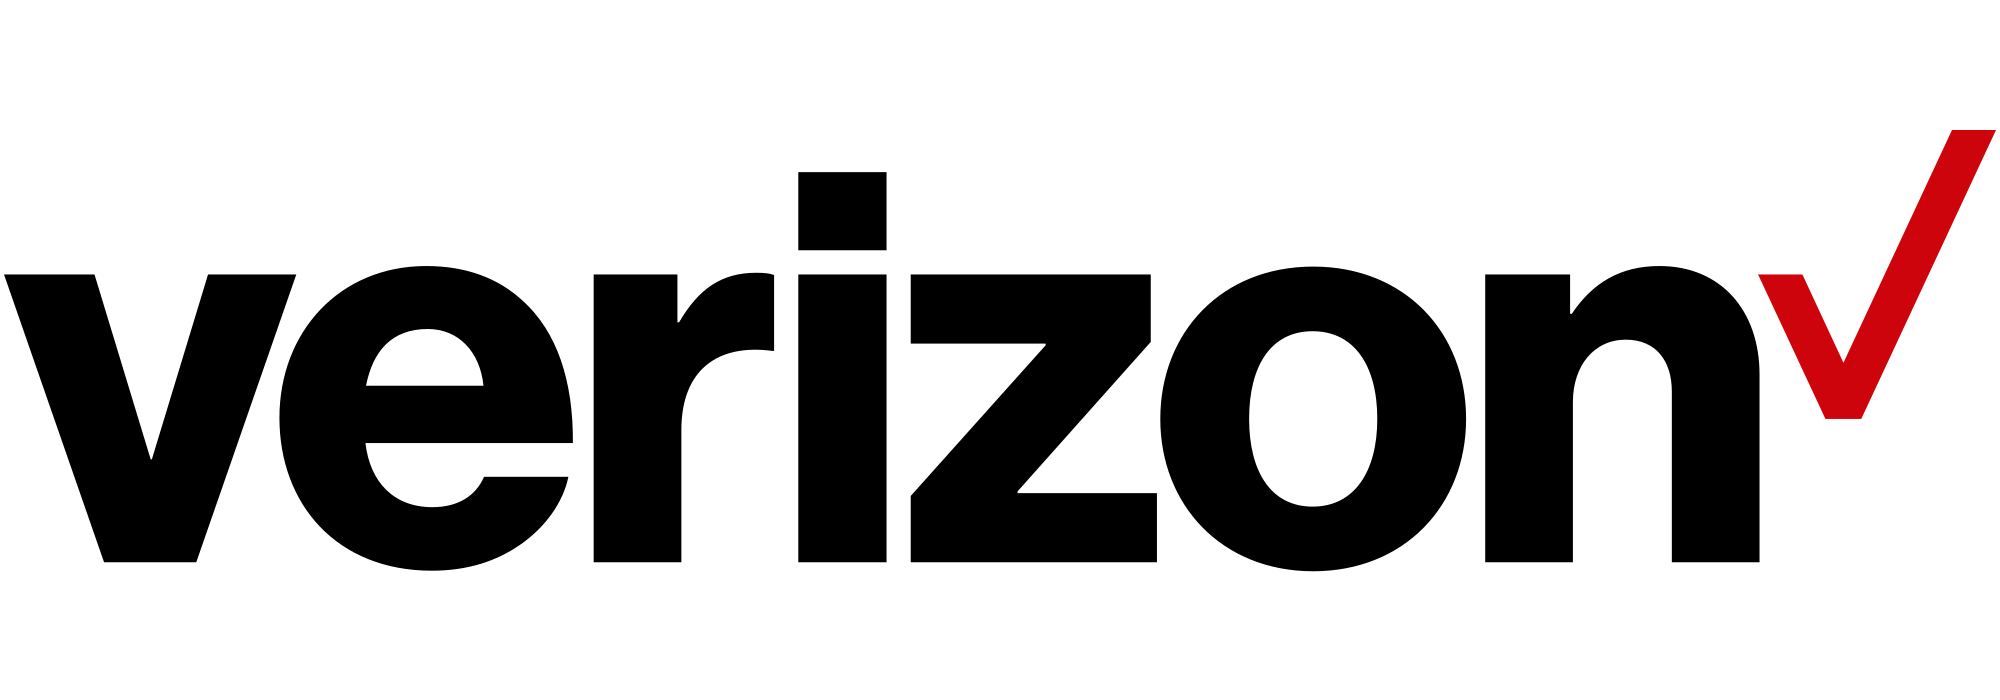 Verizon.net Logo - Meaning Verizon logo and symbol | history and evolution